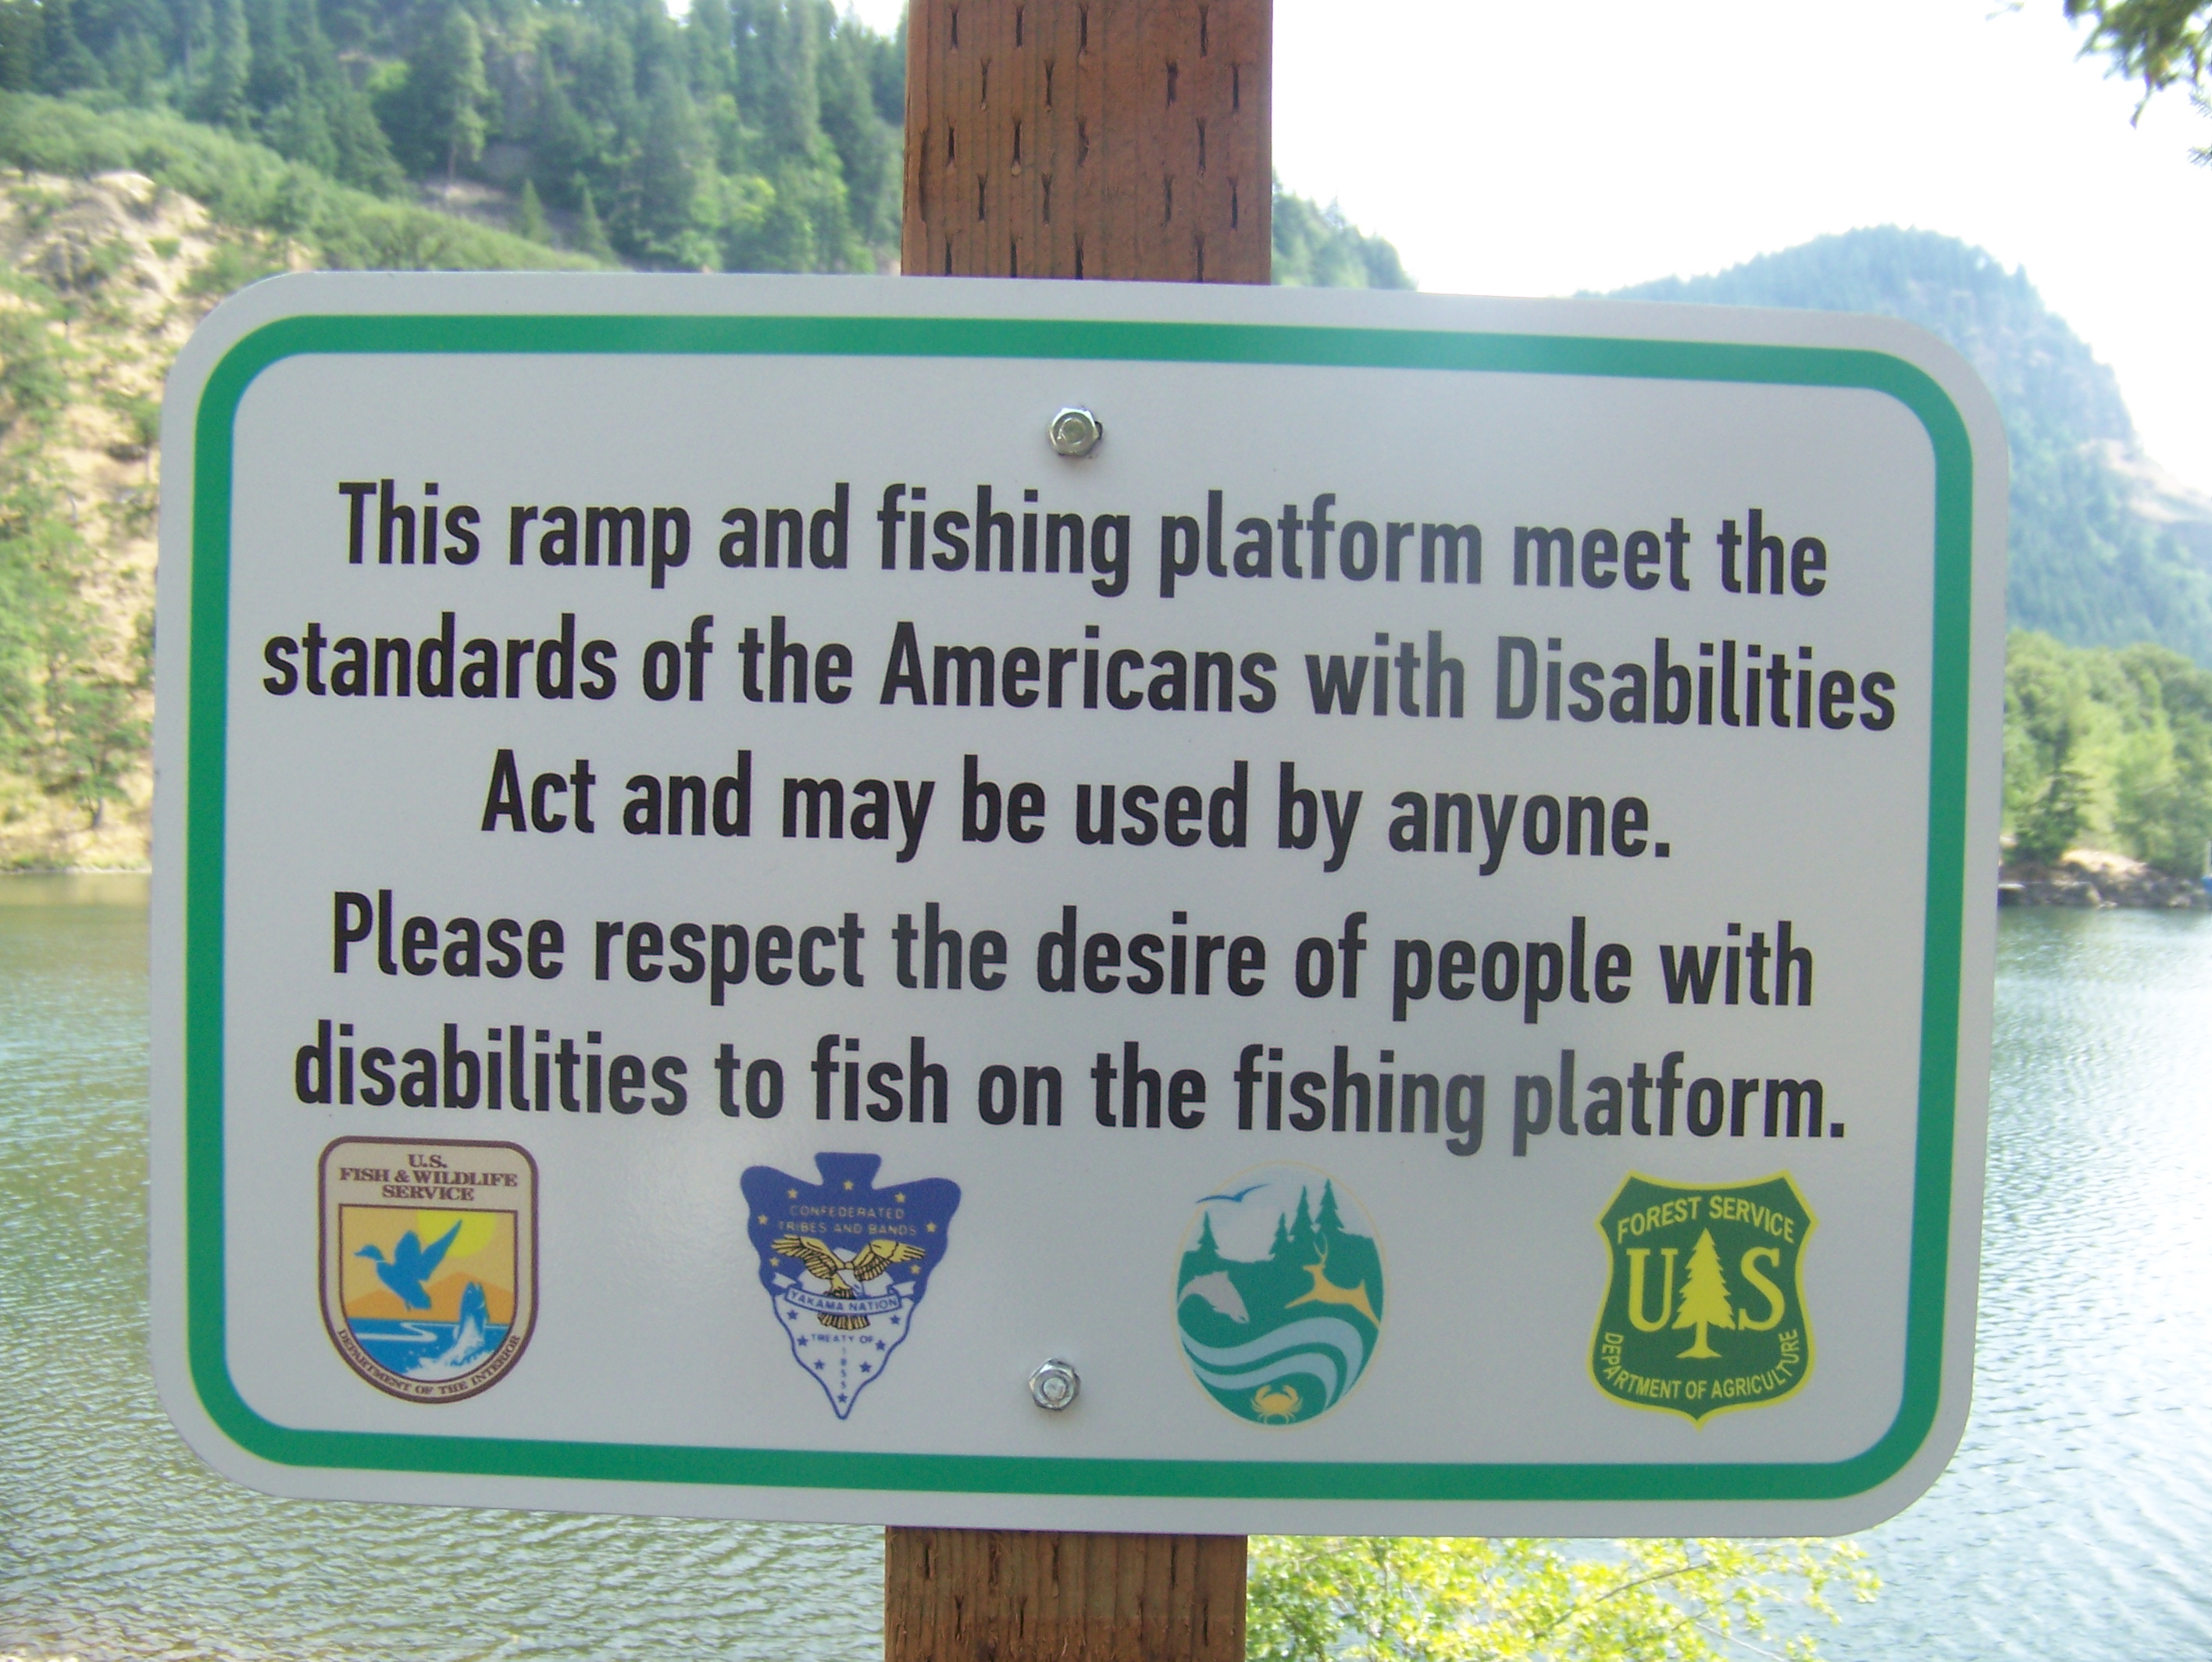 https://upload.wikimedia.org/wikipedia/commons/7/7d/Drano_Lake_accessible_fishing_platform_signage.jpg